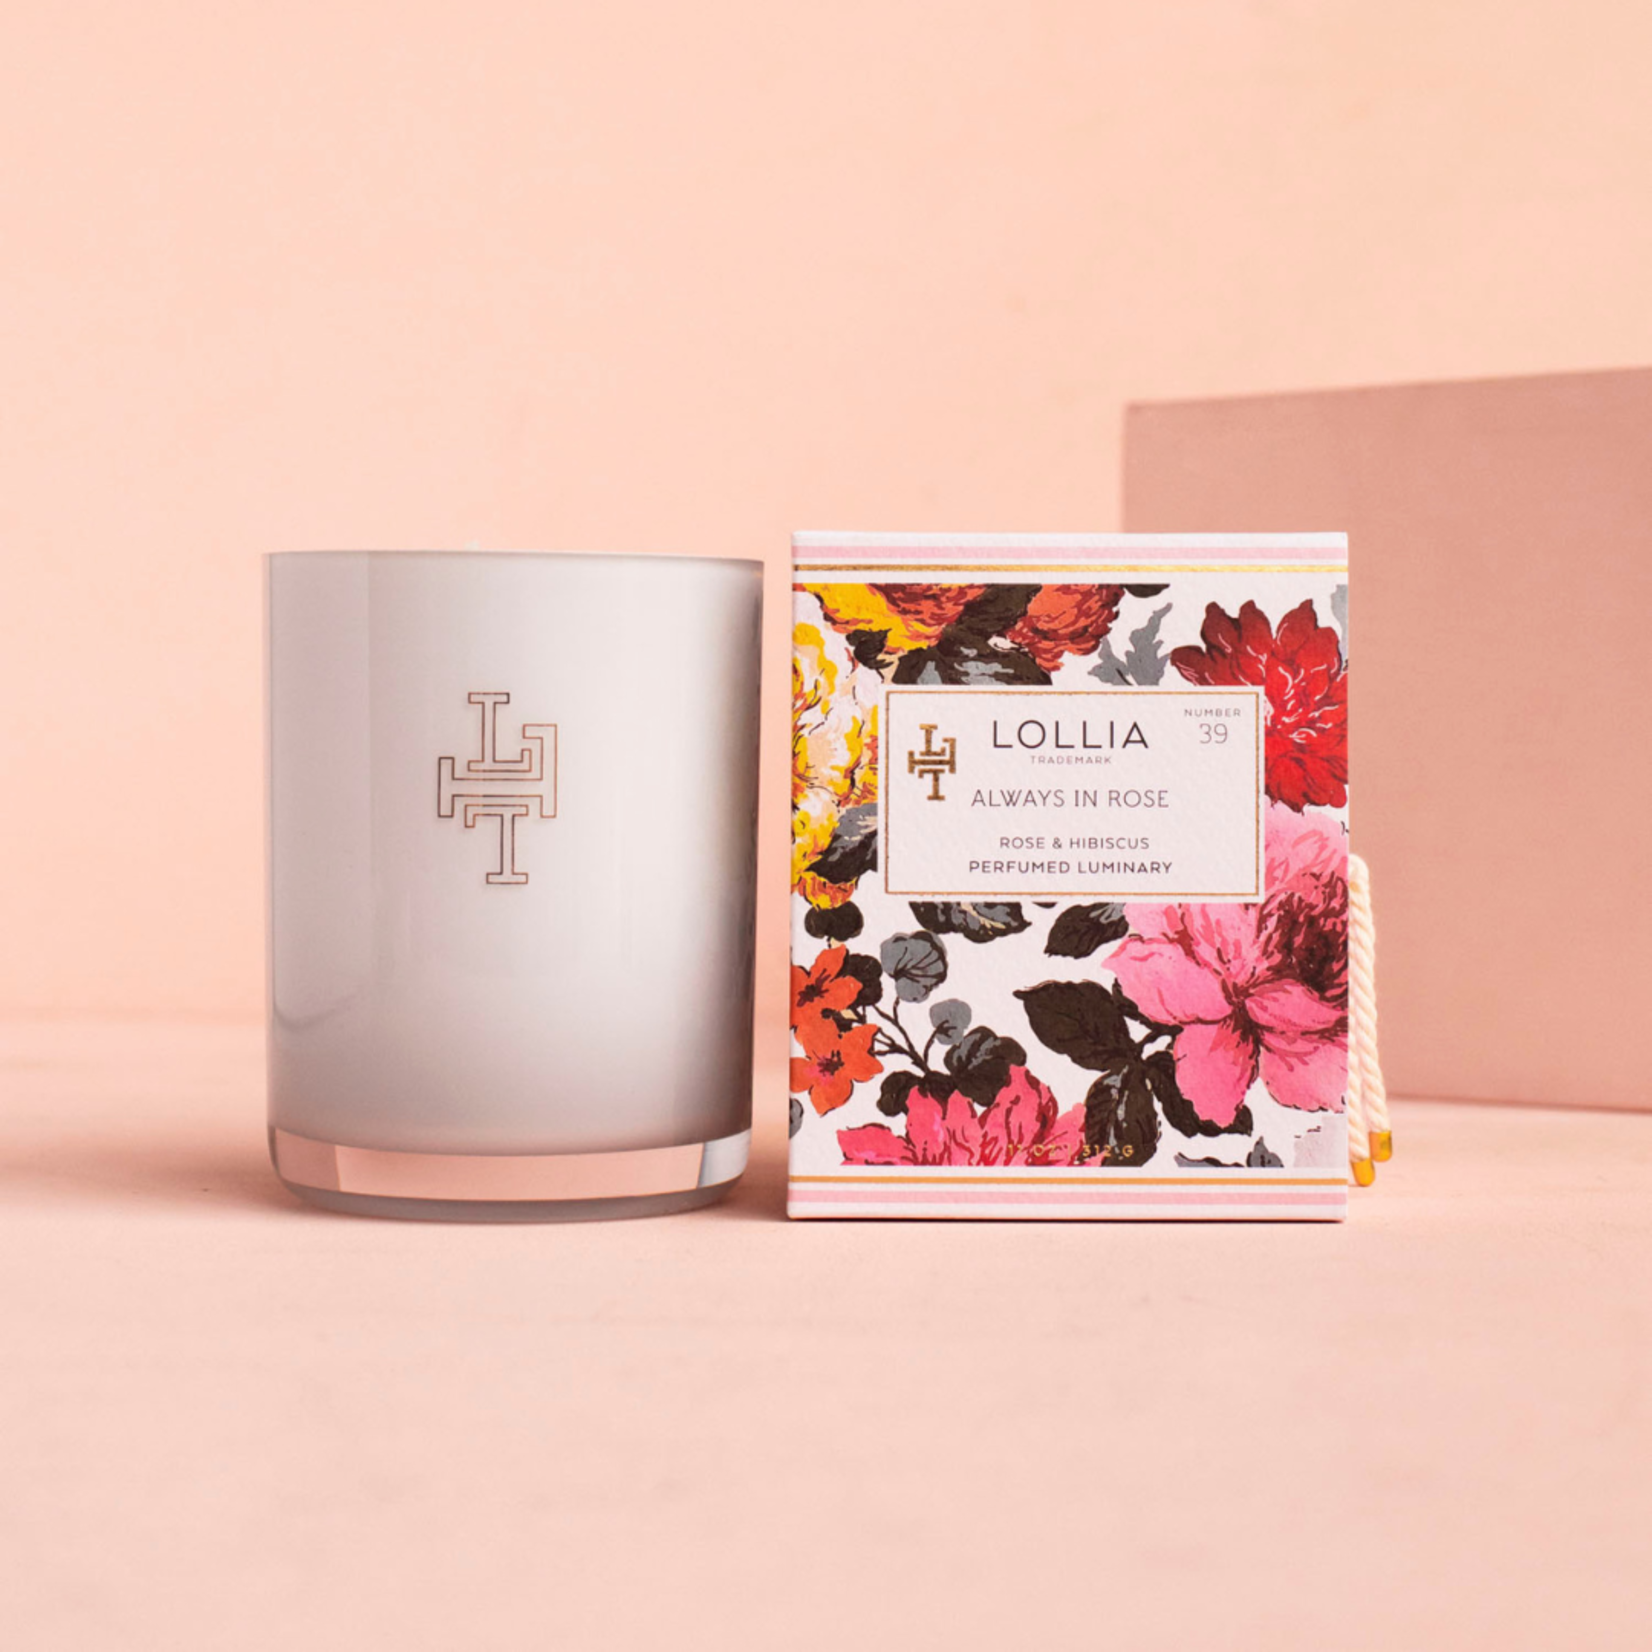 Lollia Always in Rose Boxed Perfume Luminary